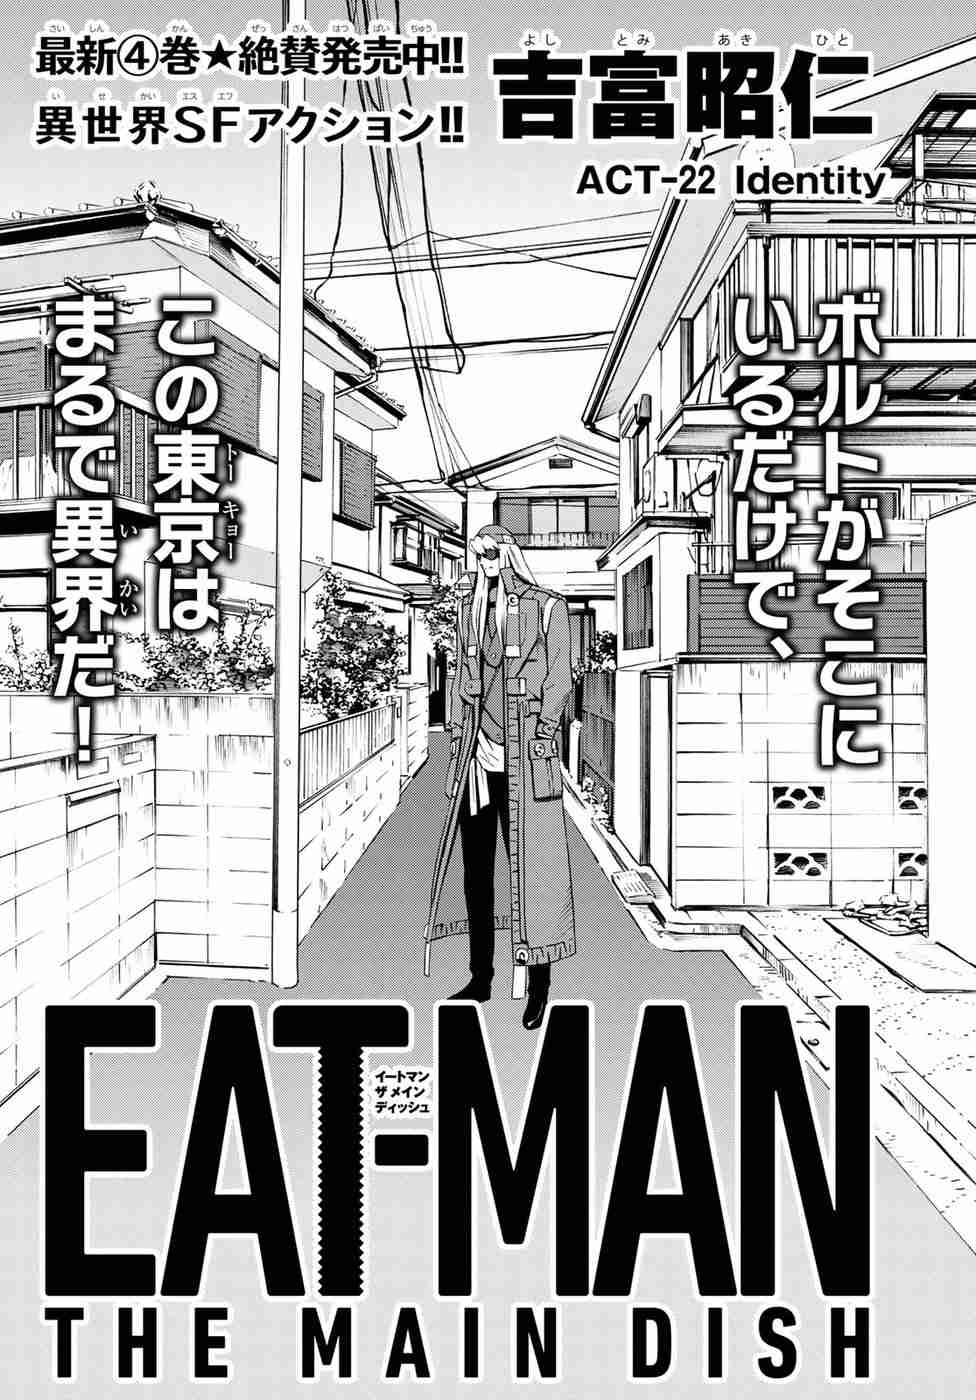 Eat Man The Main Dish Vol. 5 Ch. 22 Identity